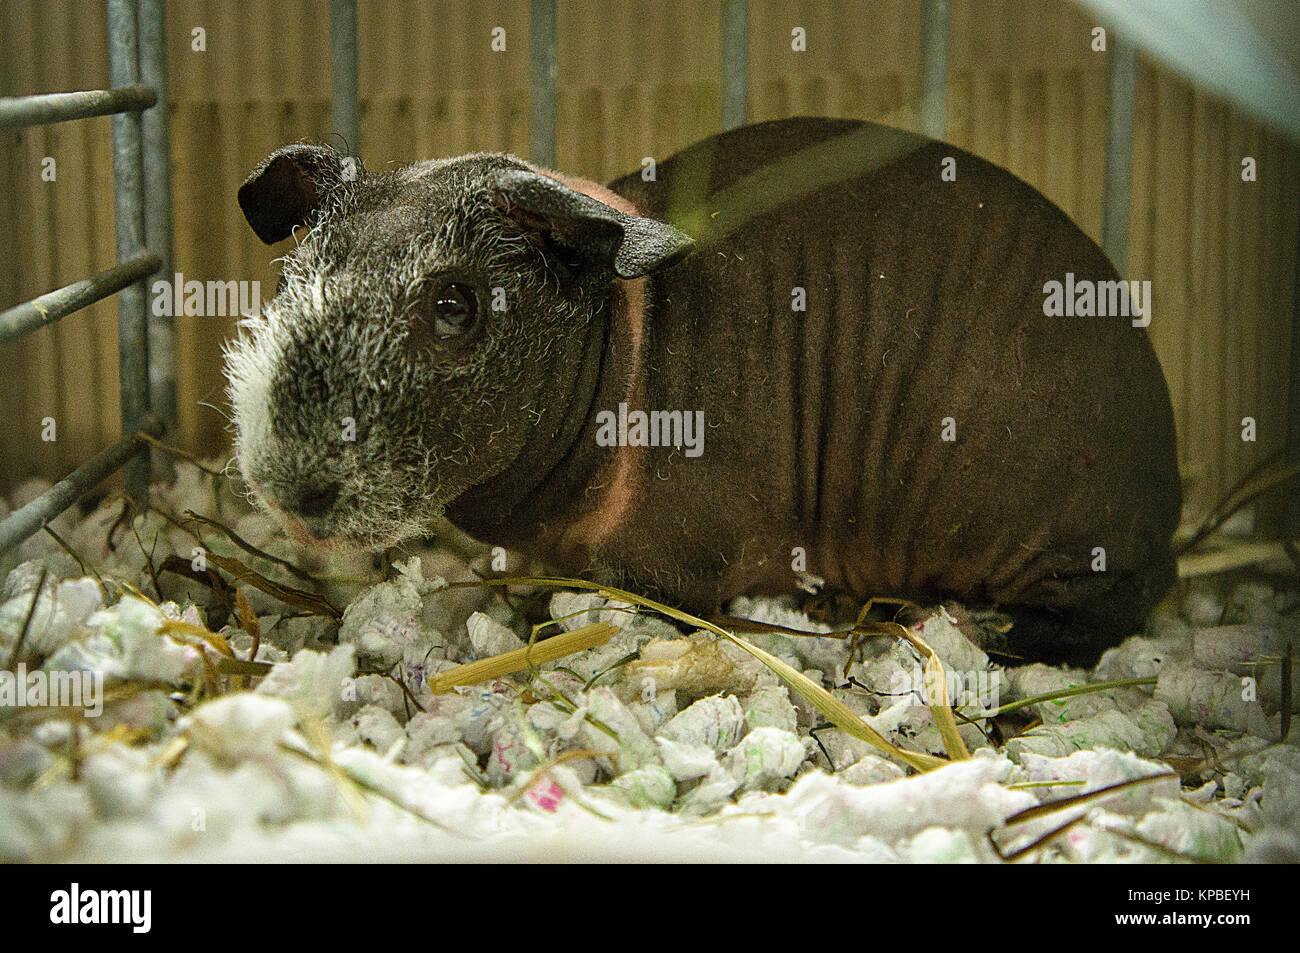 National exhibition of farming animals Chovatel 2017 (Animal breeding), domestic guinea pig, Skinny, rodent, Cavia aperea f. porcellu Stock Photo